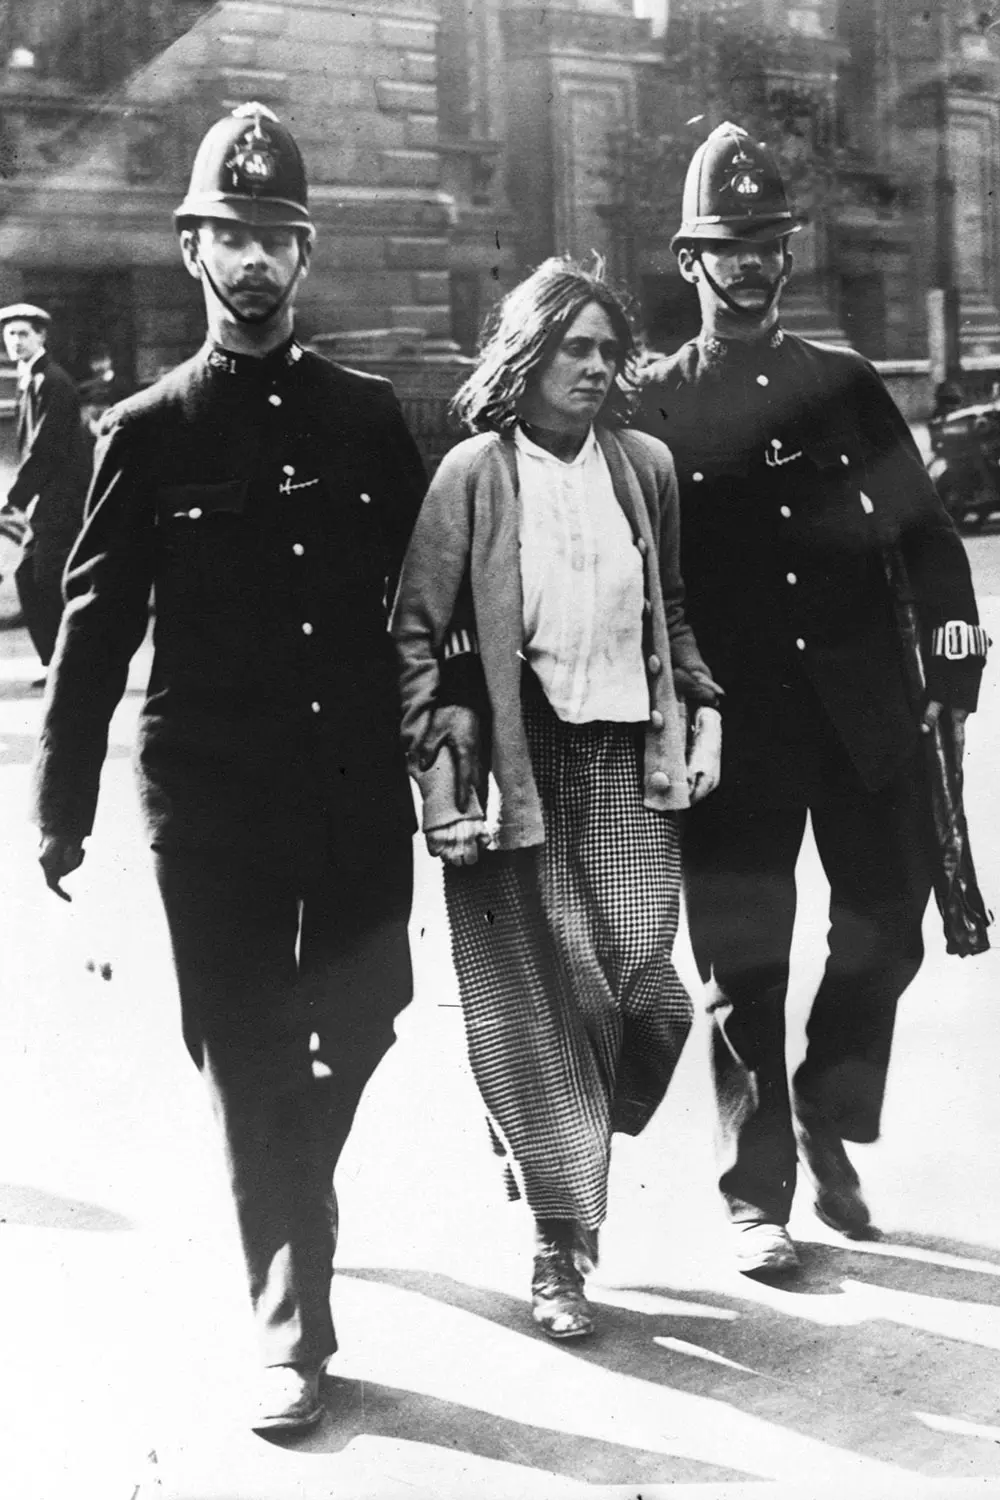 Police arrest a suffragette, 1914